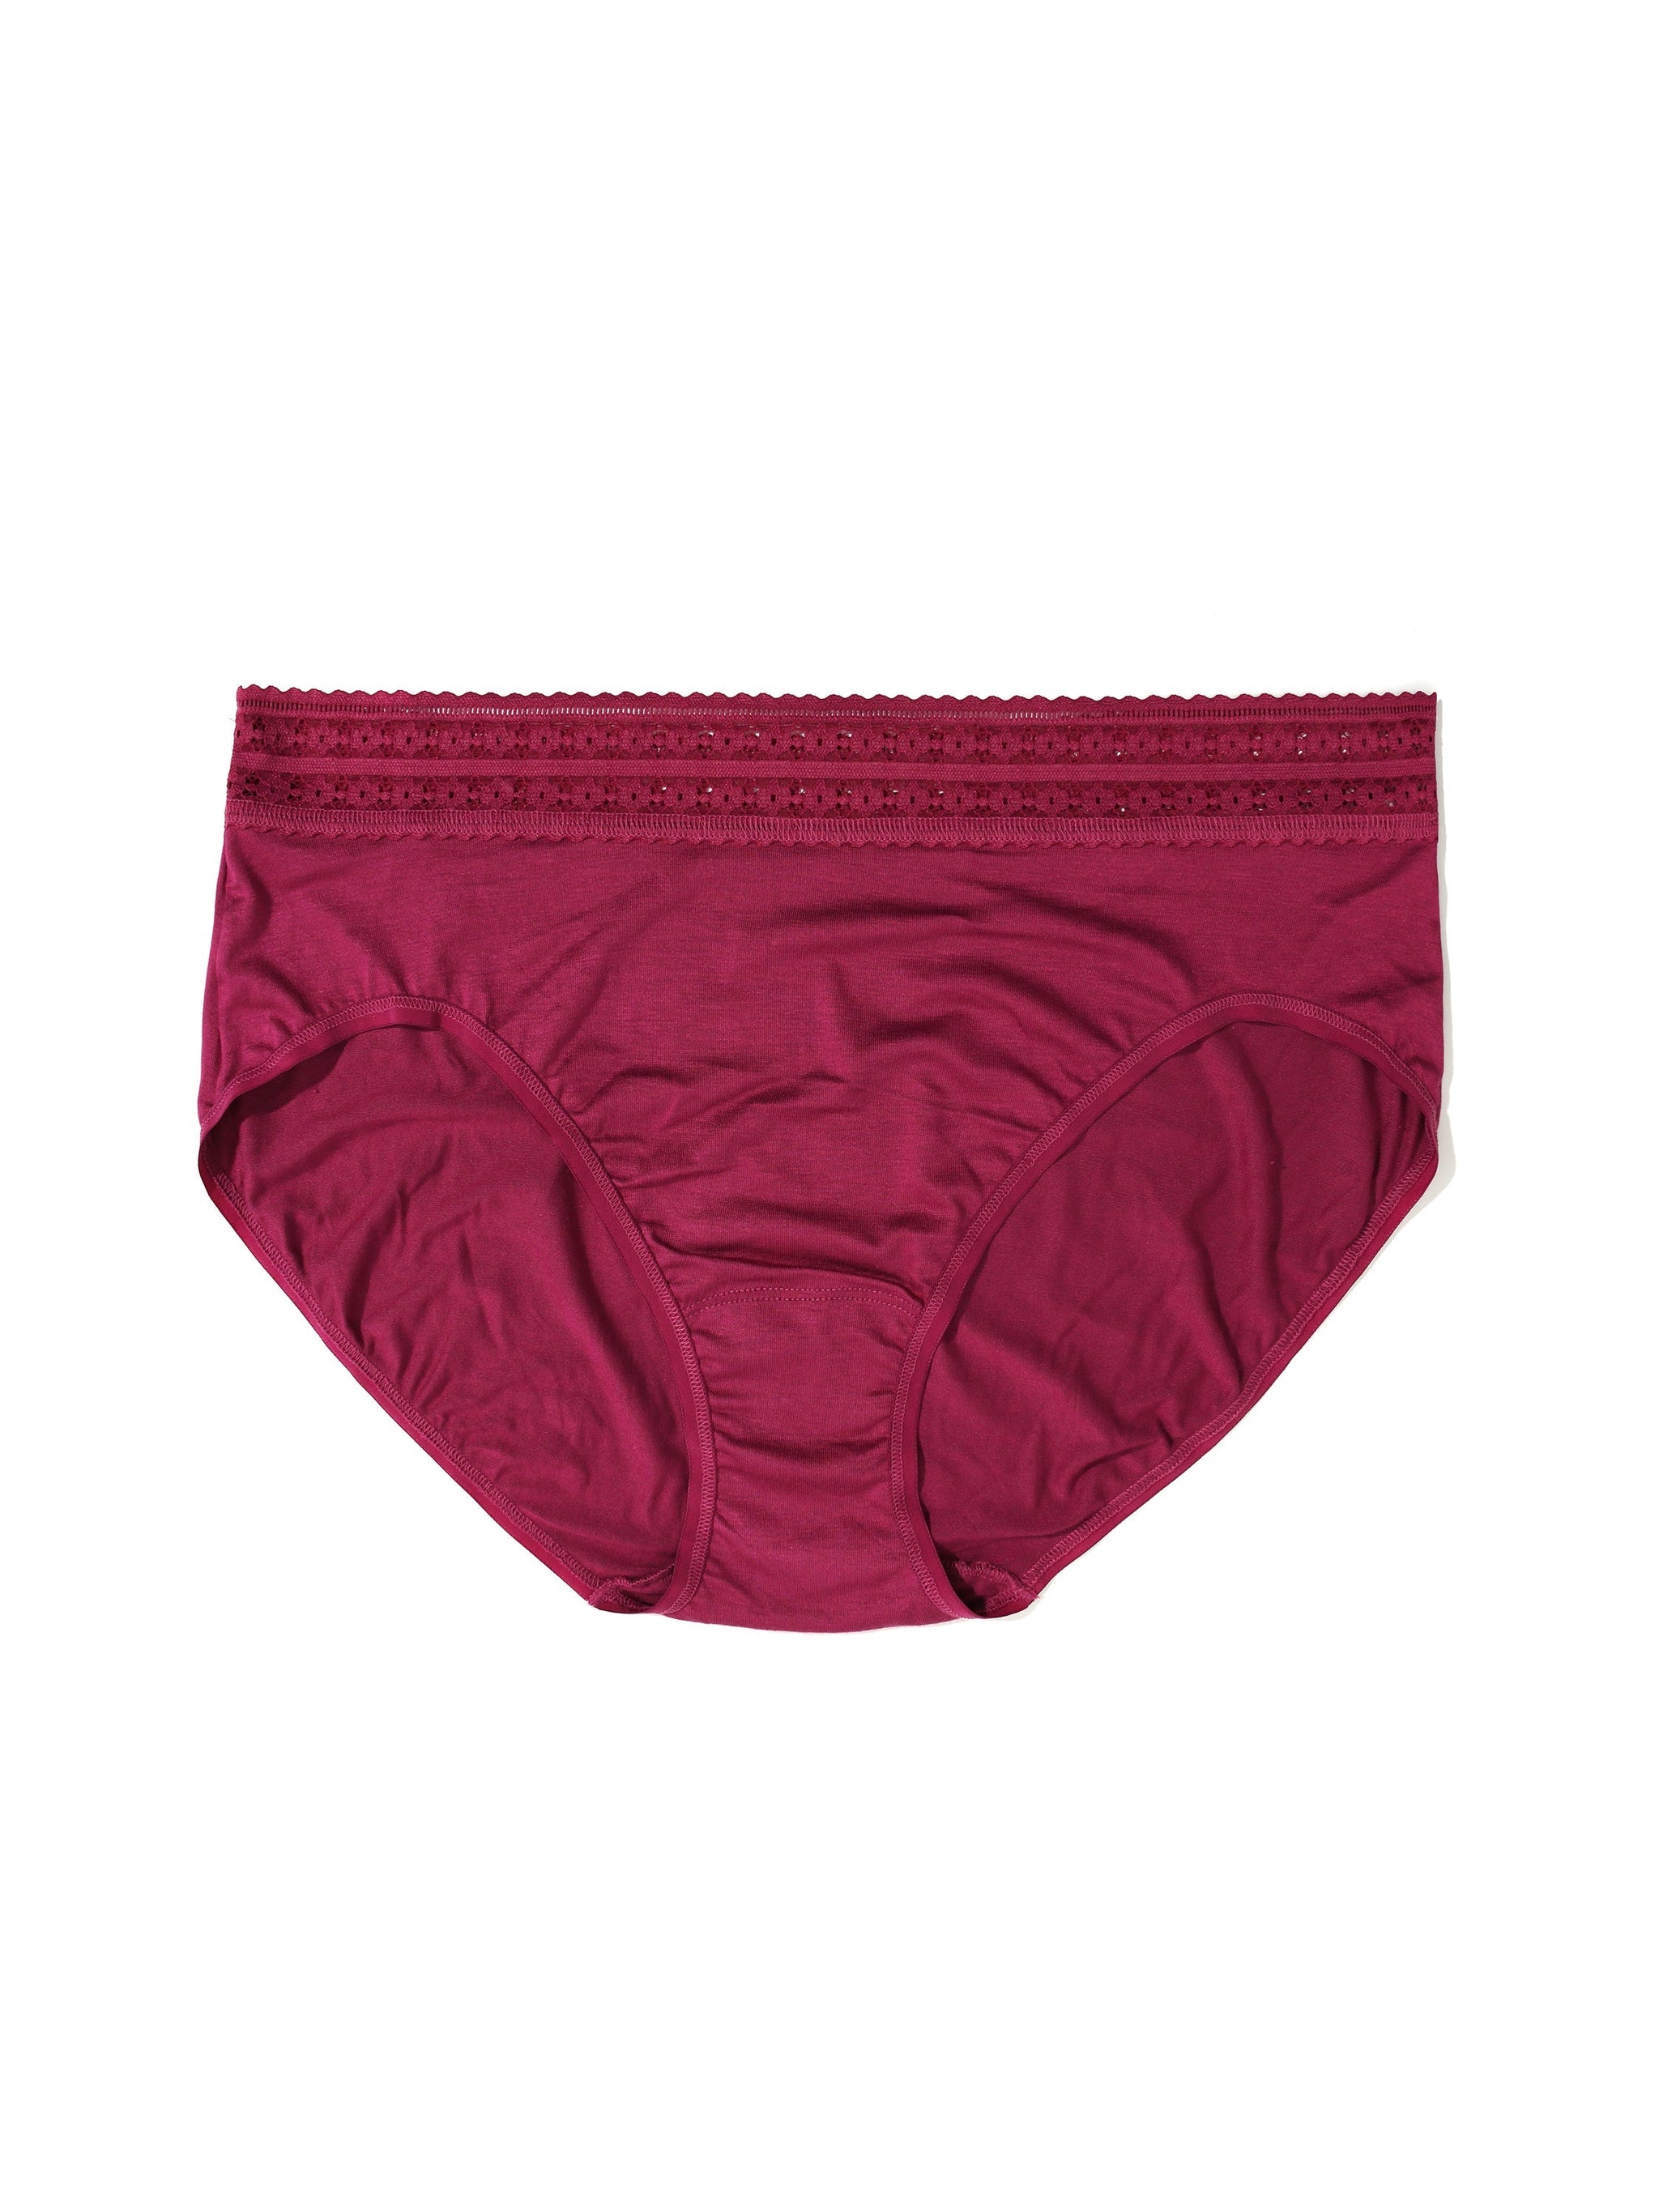 Womens Underwear Cotton Briefs Size 11 Panties Sexy Plus Size G String plus  Size (Pink, M)